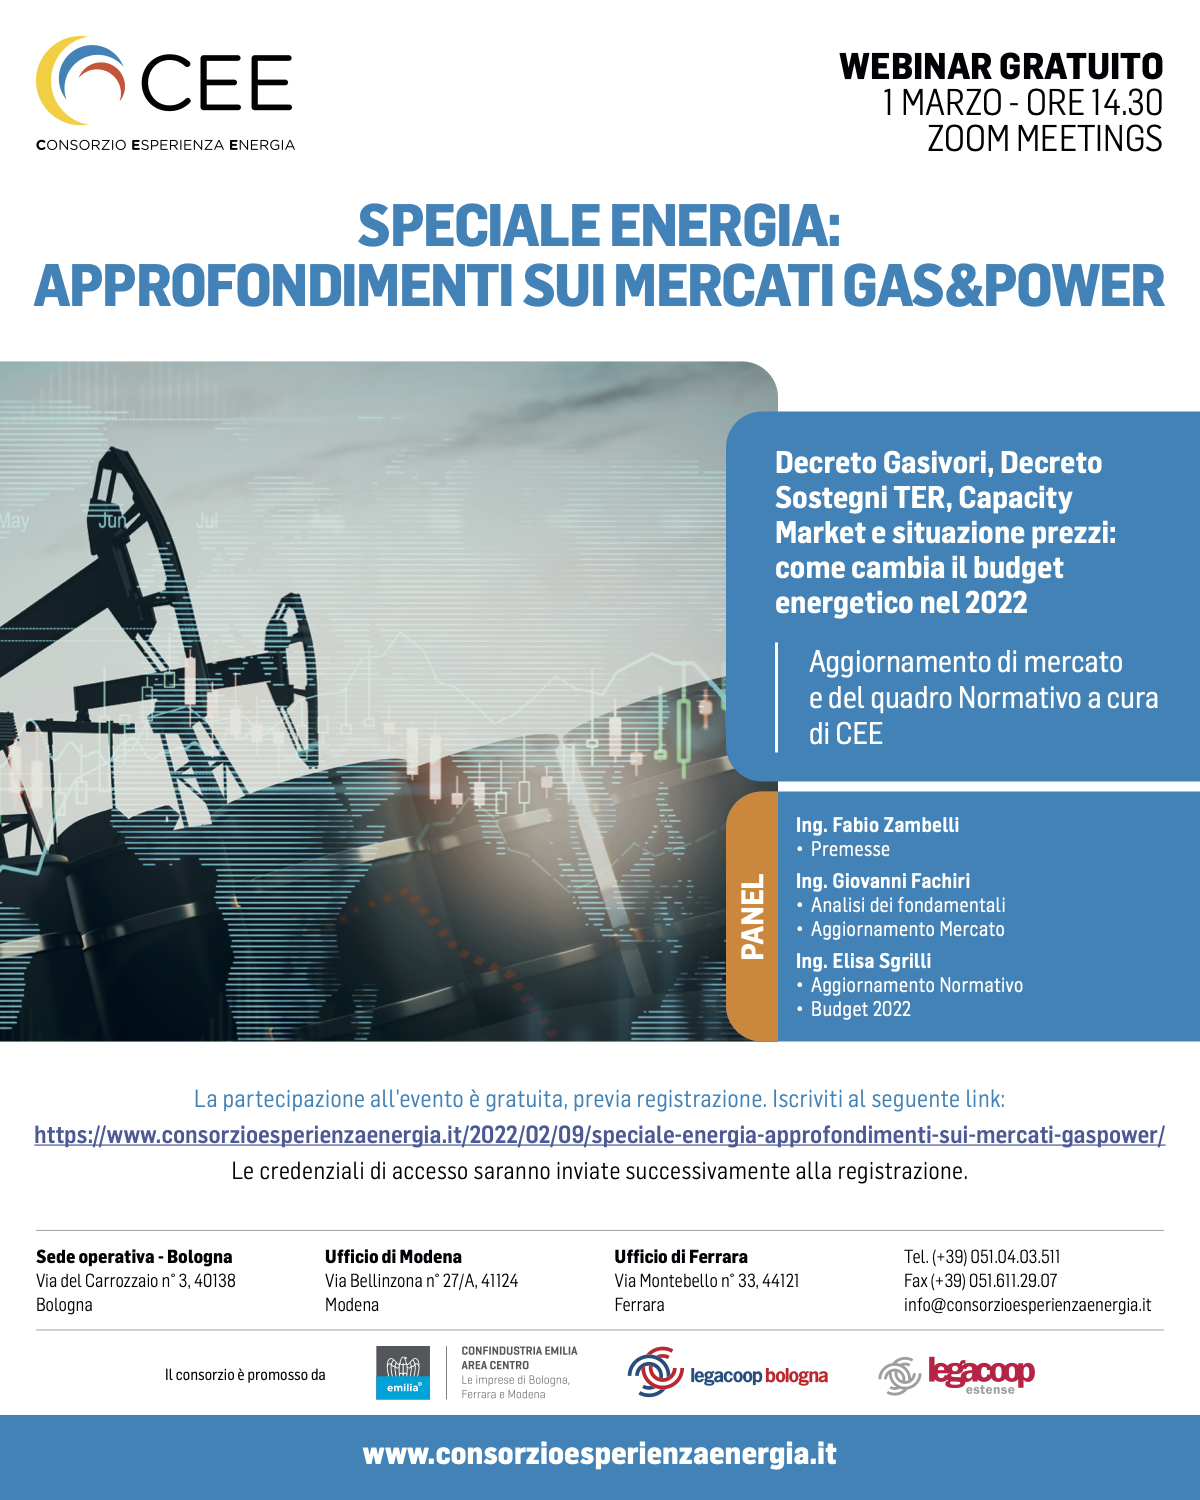 Speciale Energia: l’1 marzo un webinar gratuito con Consorzio Esperienza Energia